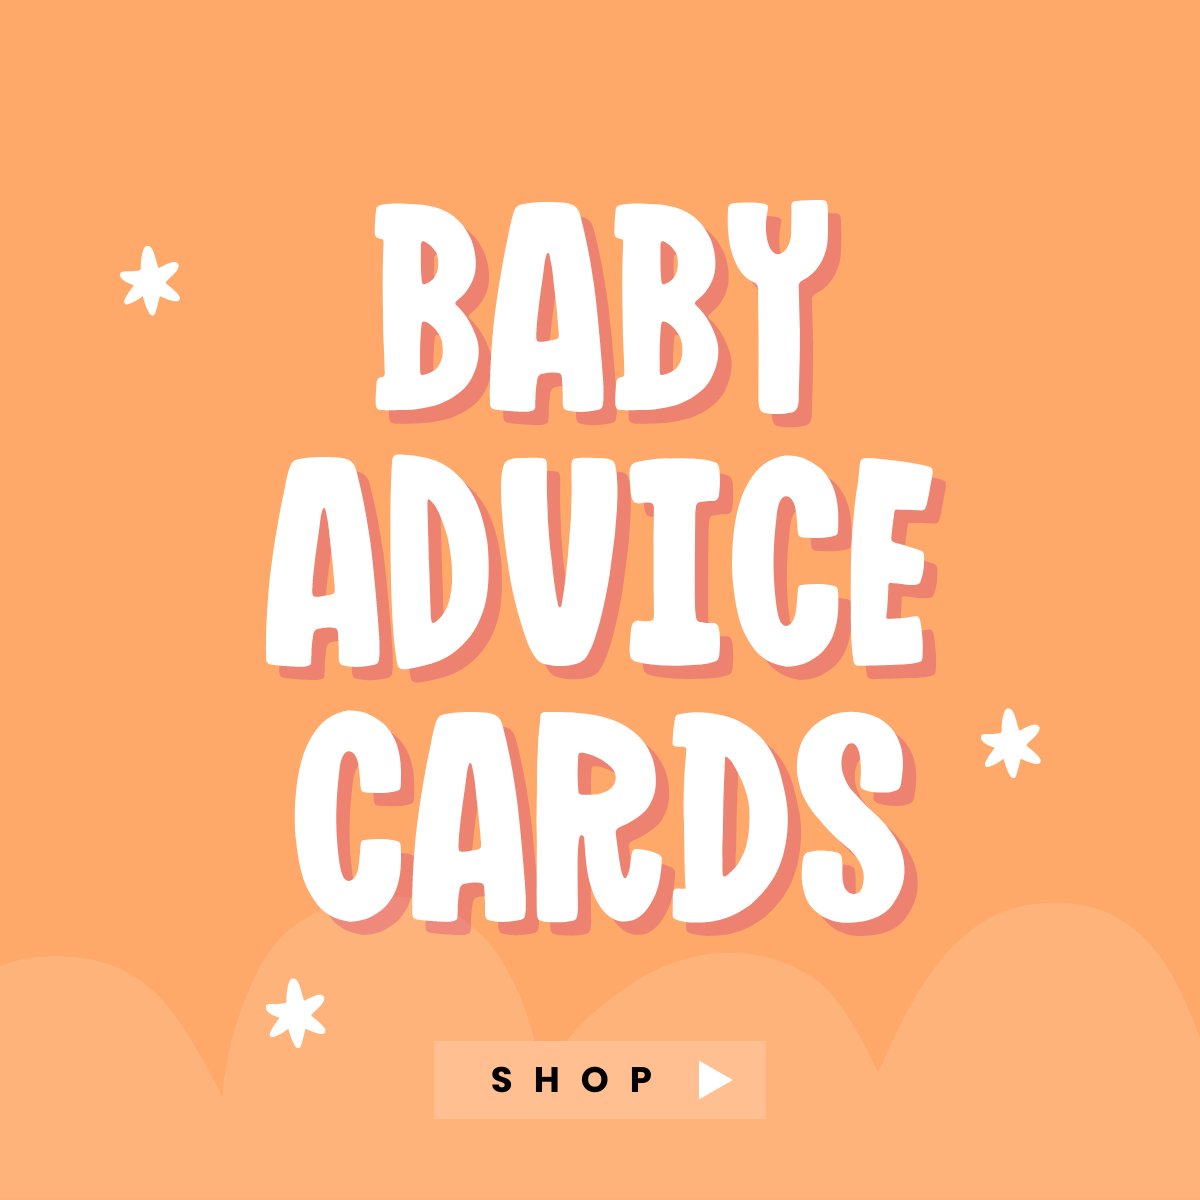 BABY ADVICE CARDS